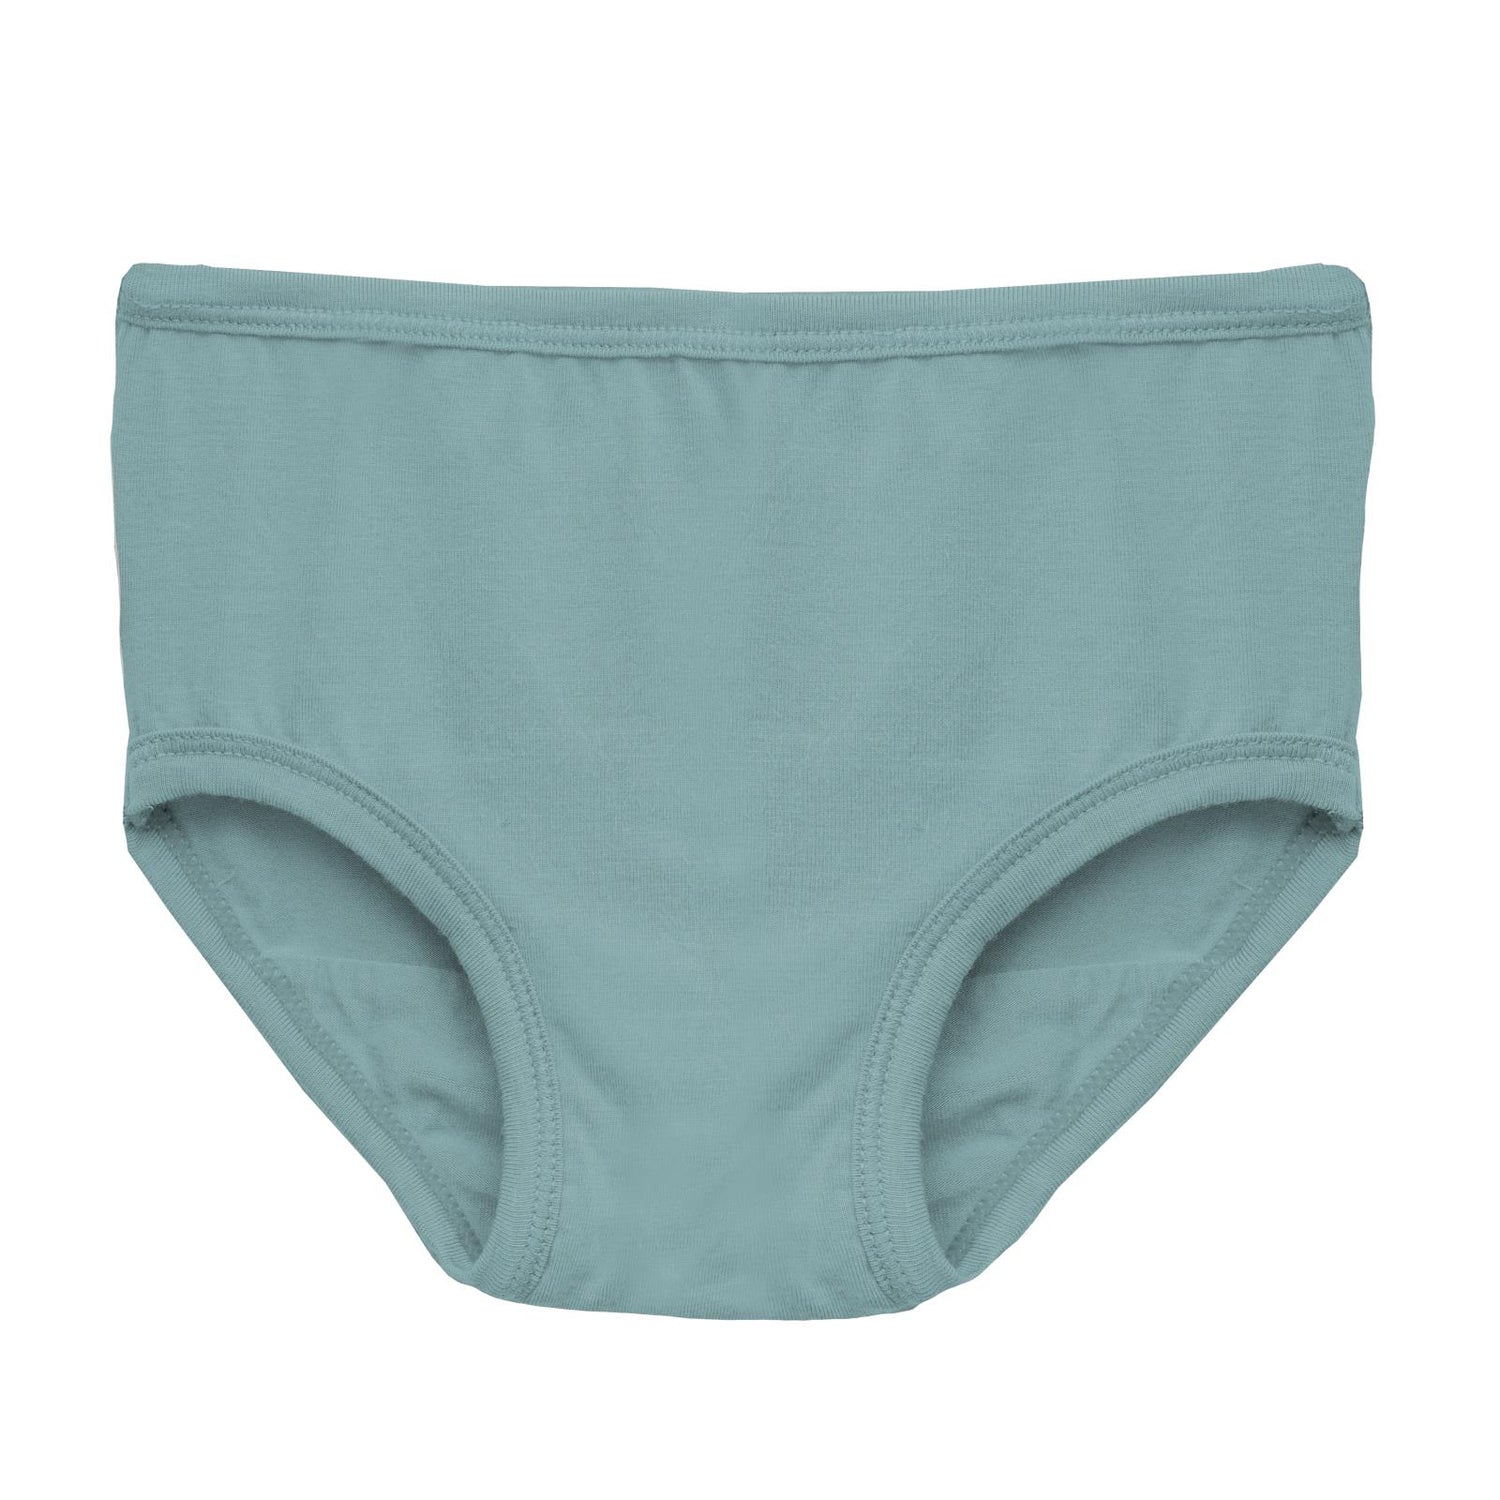 Underwear in Jade